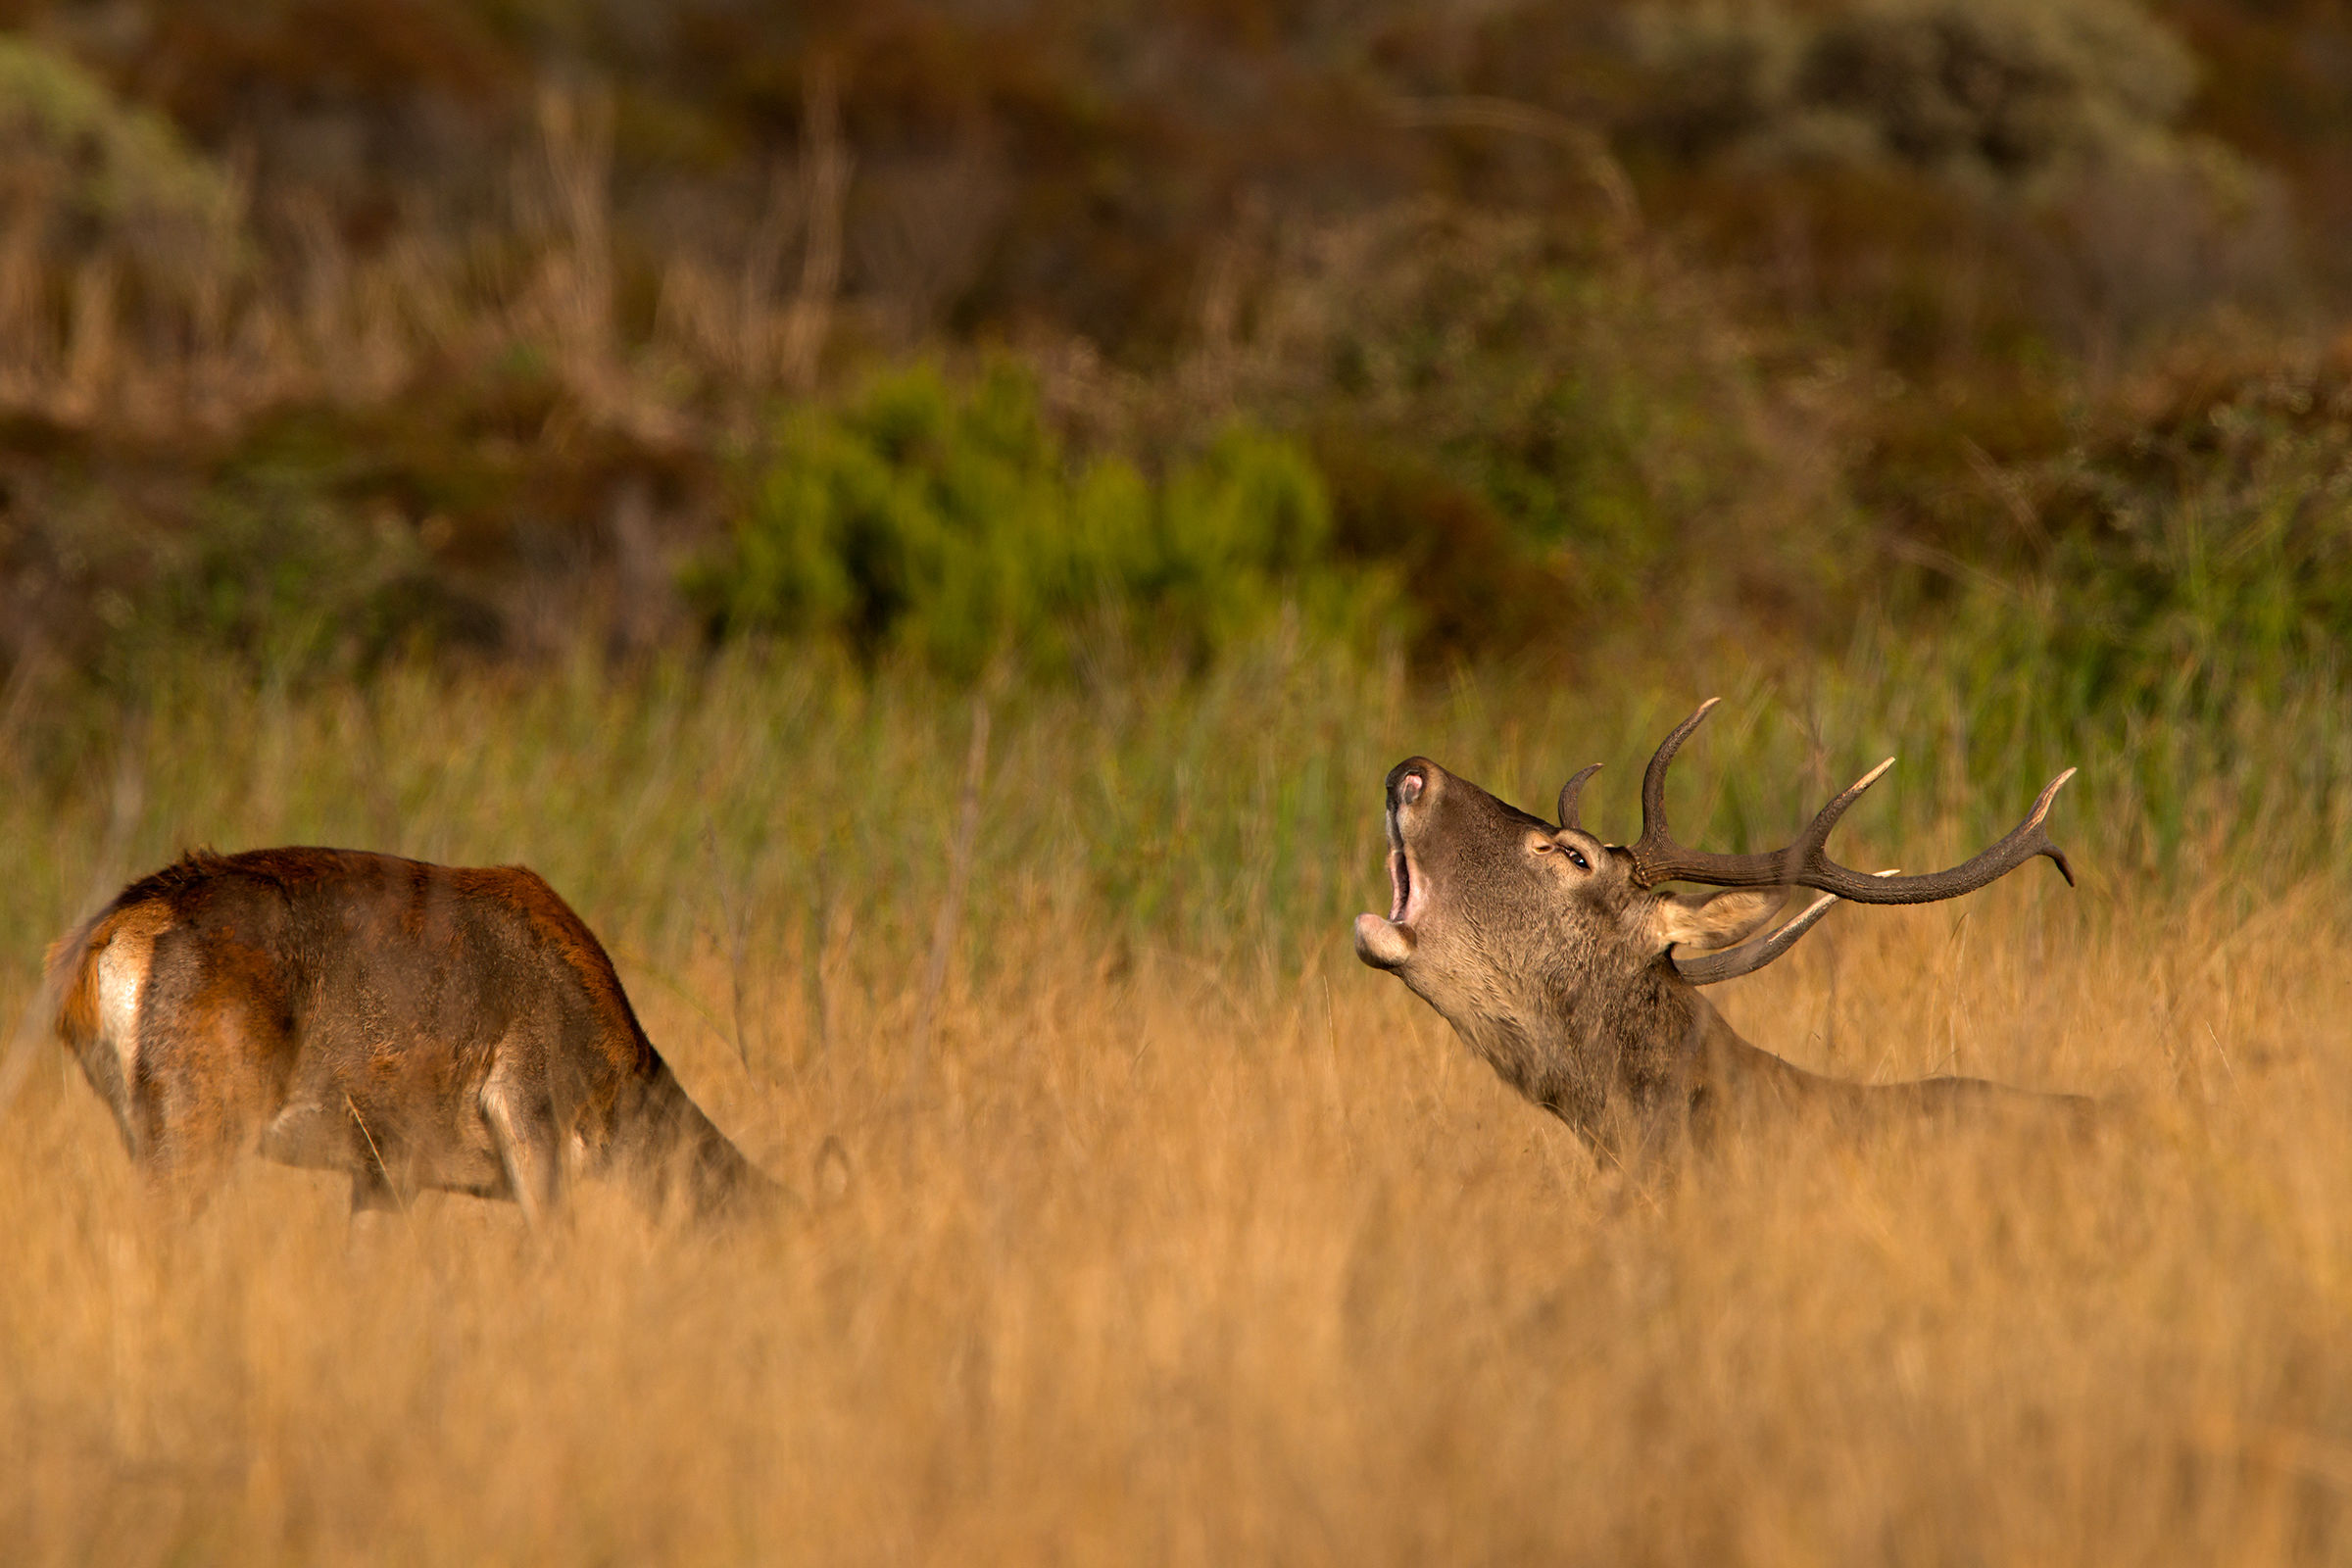 the roar of the Sardinian deer (lying)...